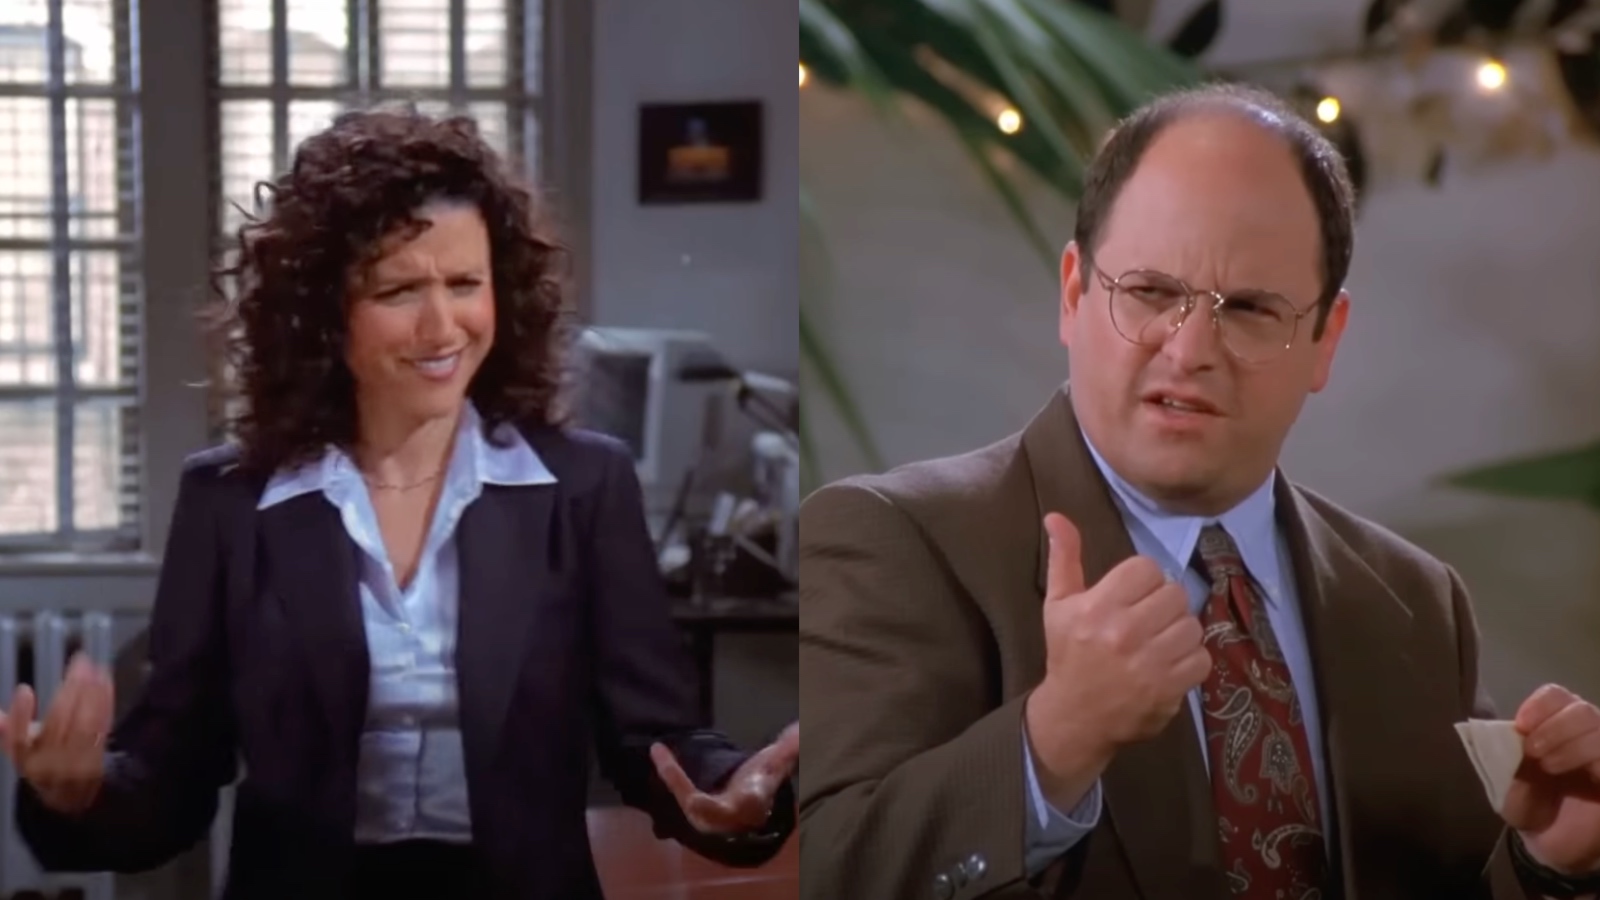 Elaine Benes Seinfeld Dancing scene